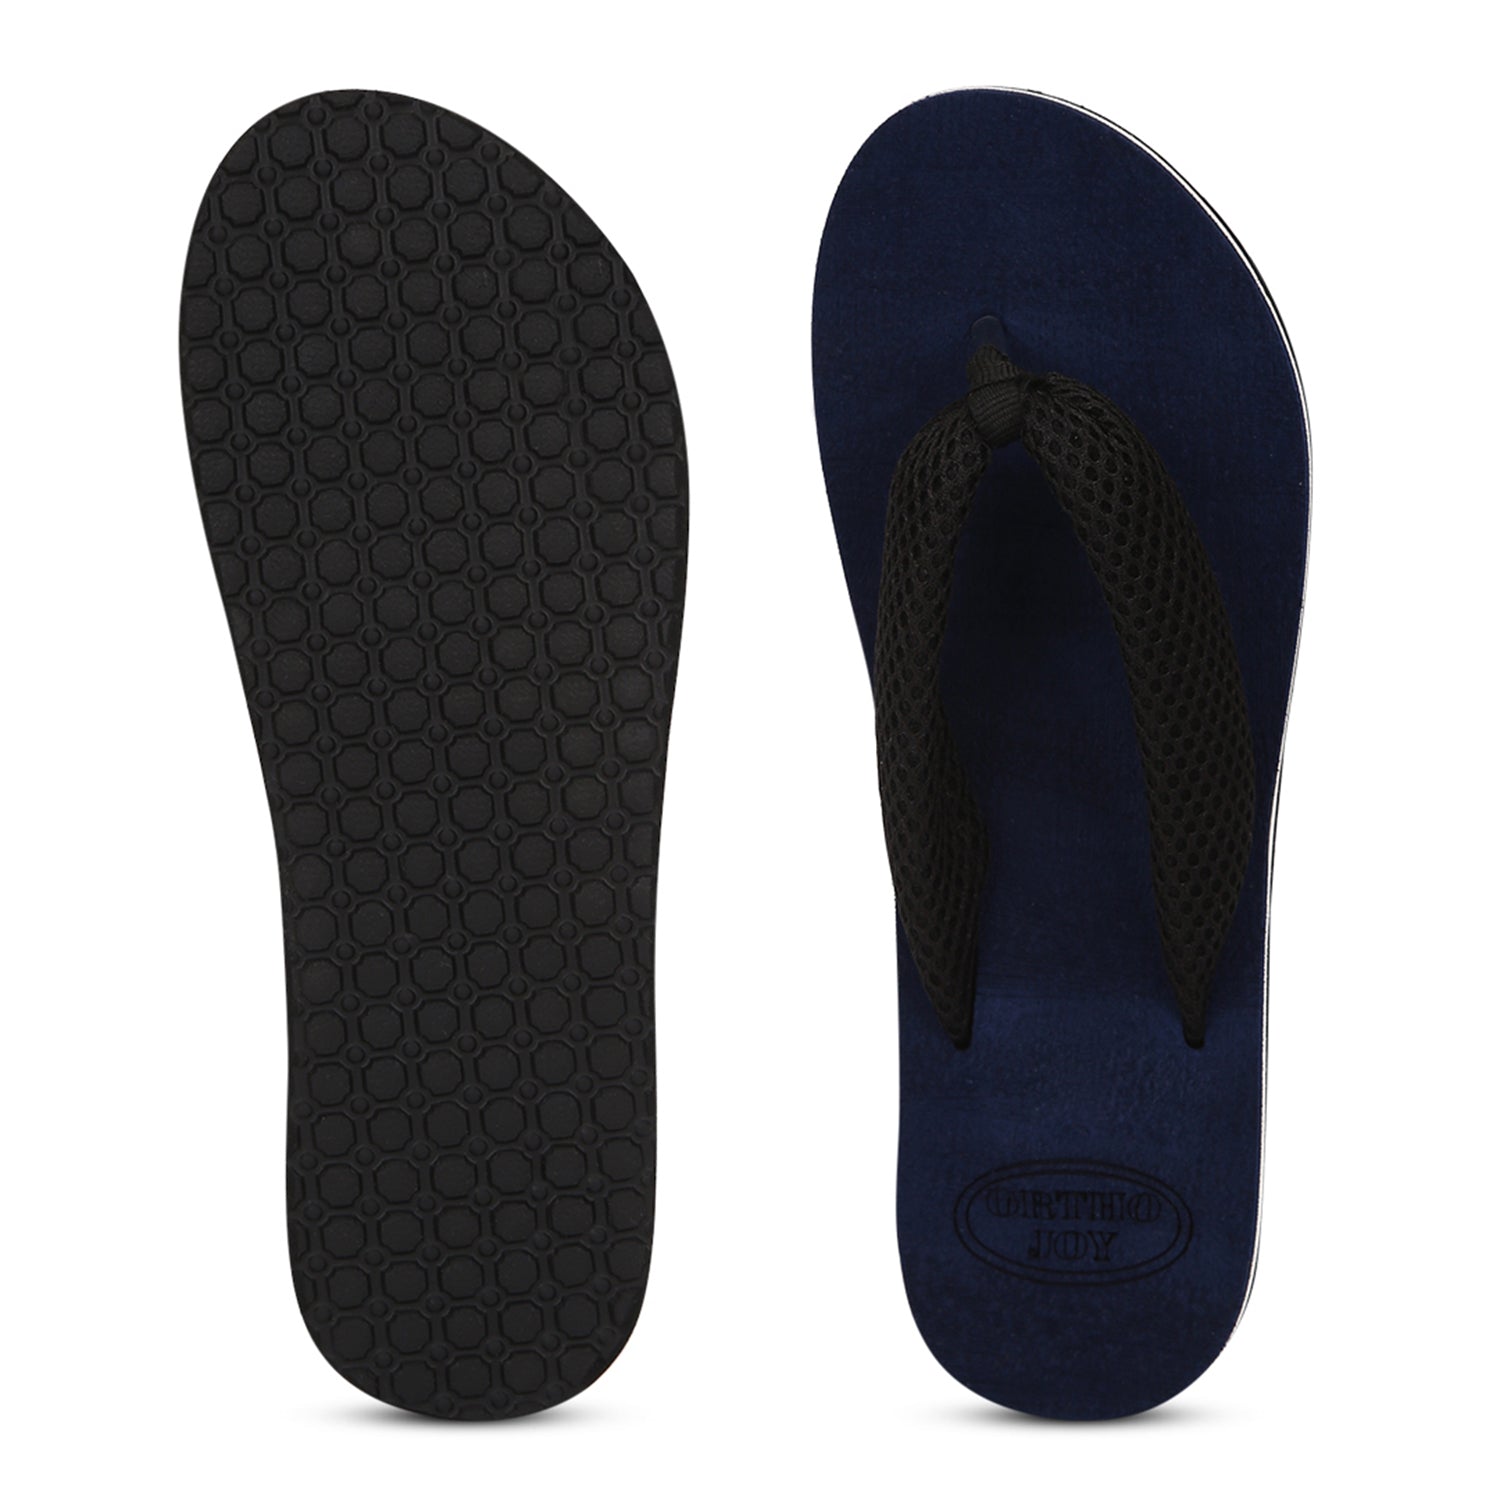 ORTHO JOY orthopaedic & diabetic slippers